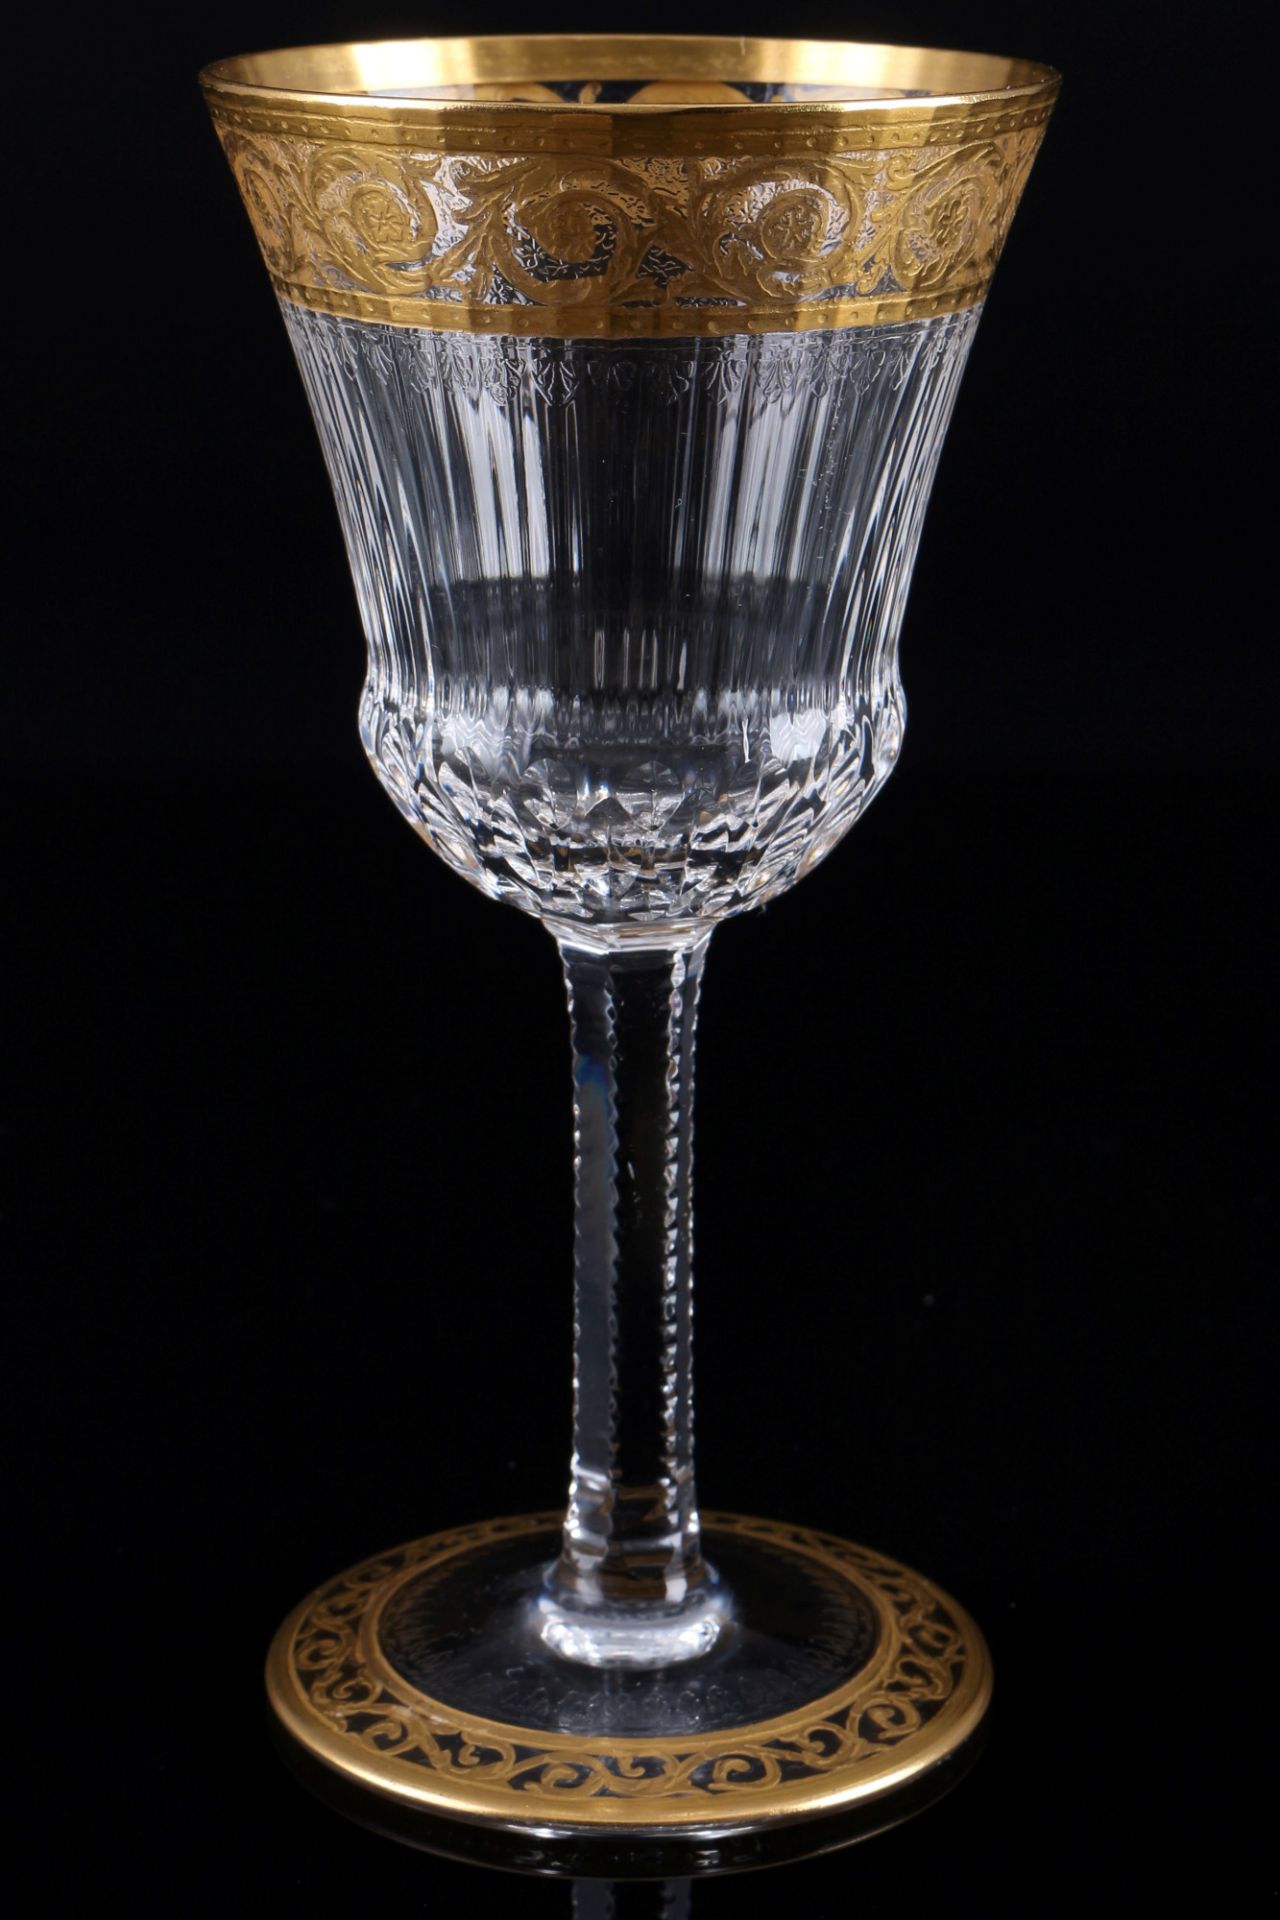 St. Louis Thistle Gold 6 dessert wine glasses, Südweingläser, - Image 2 of 3